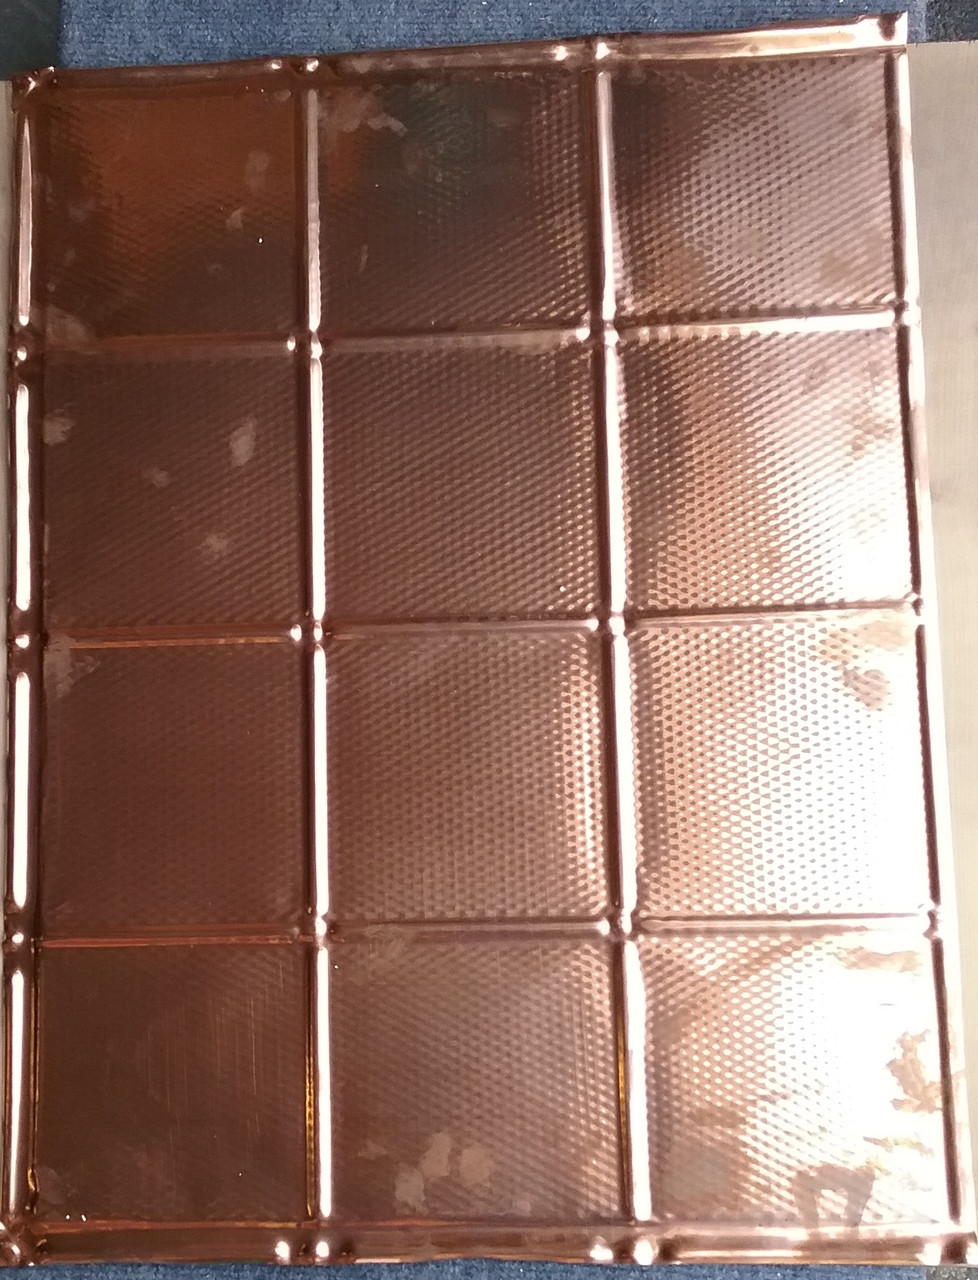  LOT # 51A  Soho Backsplash # 0617 (3 SQ FT) 1 PCS  Solid Copper   24 x 18 nail up . 